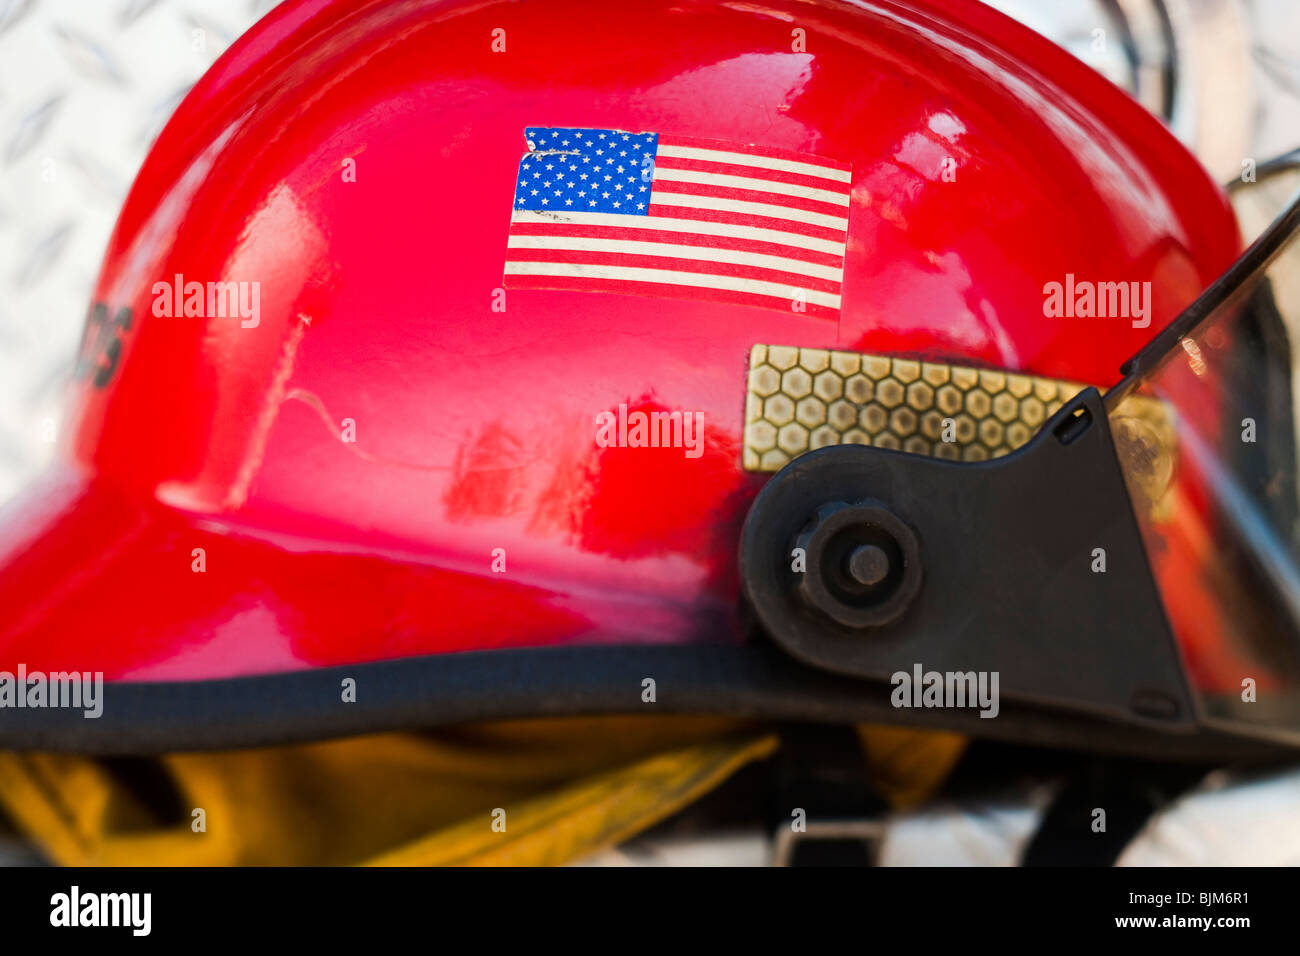 US-Flagge auf rotem Helm Stockfoto